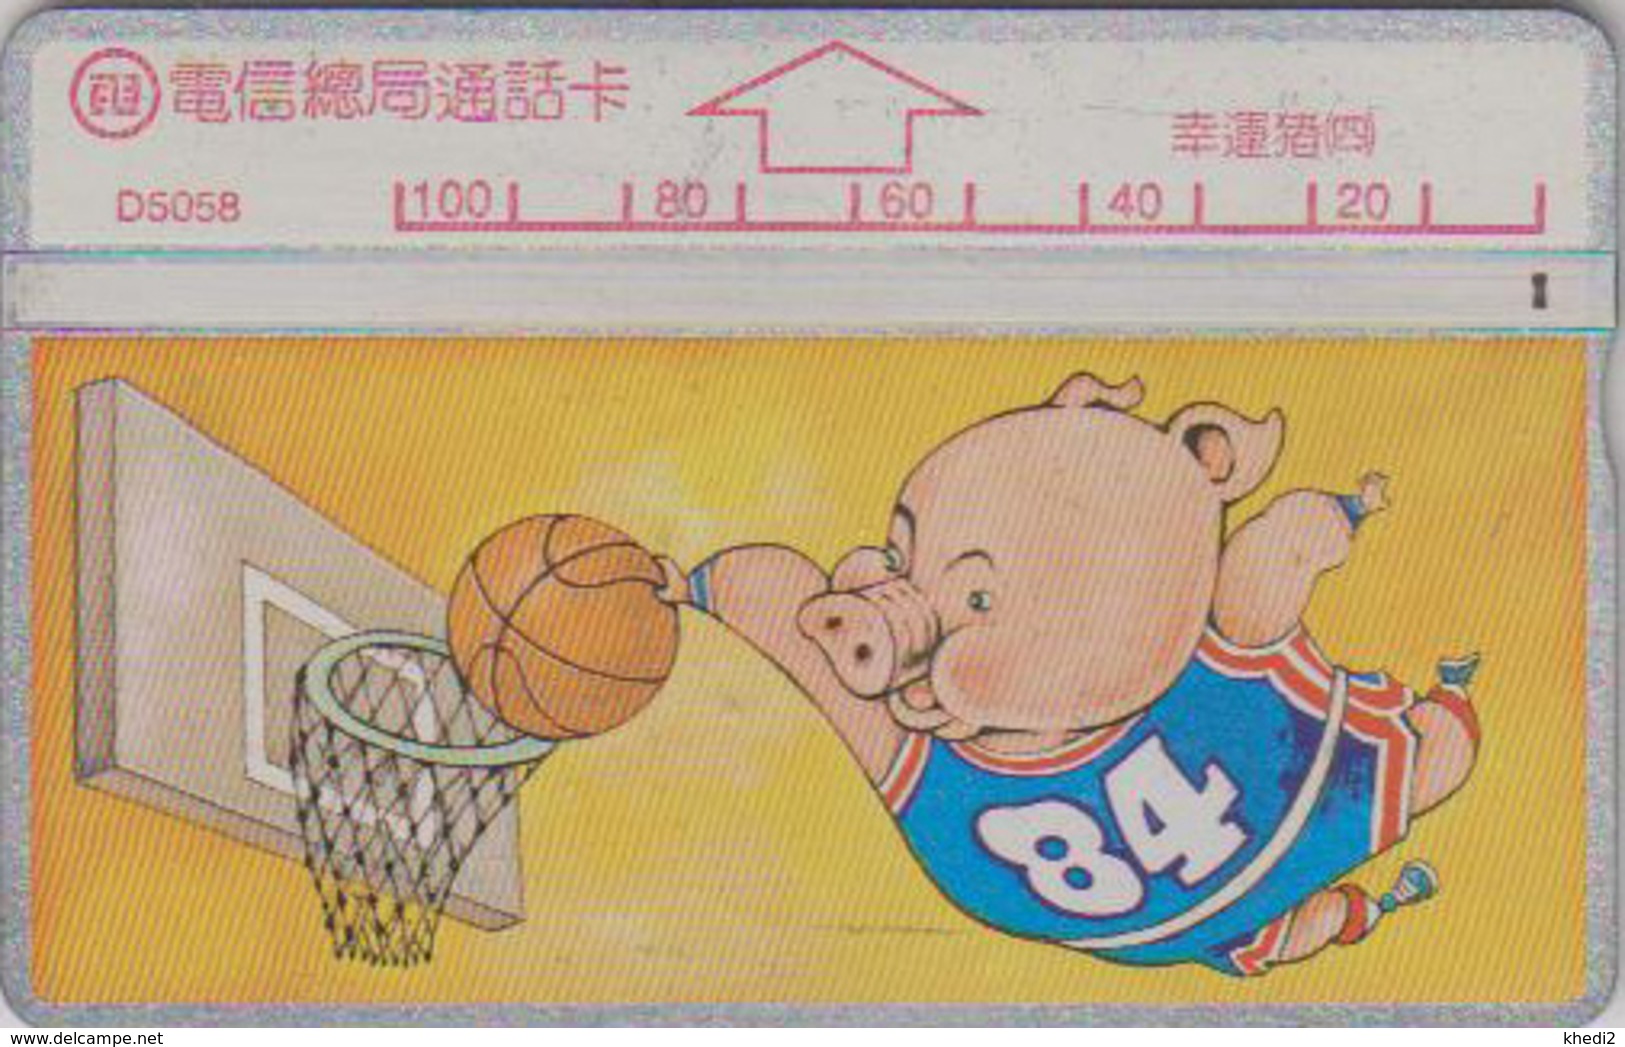 Télécarte L&G TAIWAN - ANIMAL - COCHON & Basketball - PIG  Sport TAIWAN Phonecard - SCHWEIN - PORCO - 67 - Taiwan (Formose)